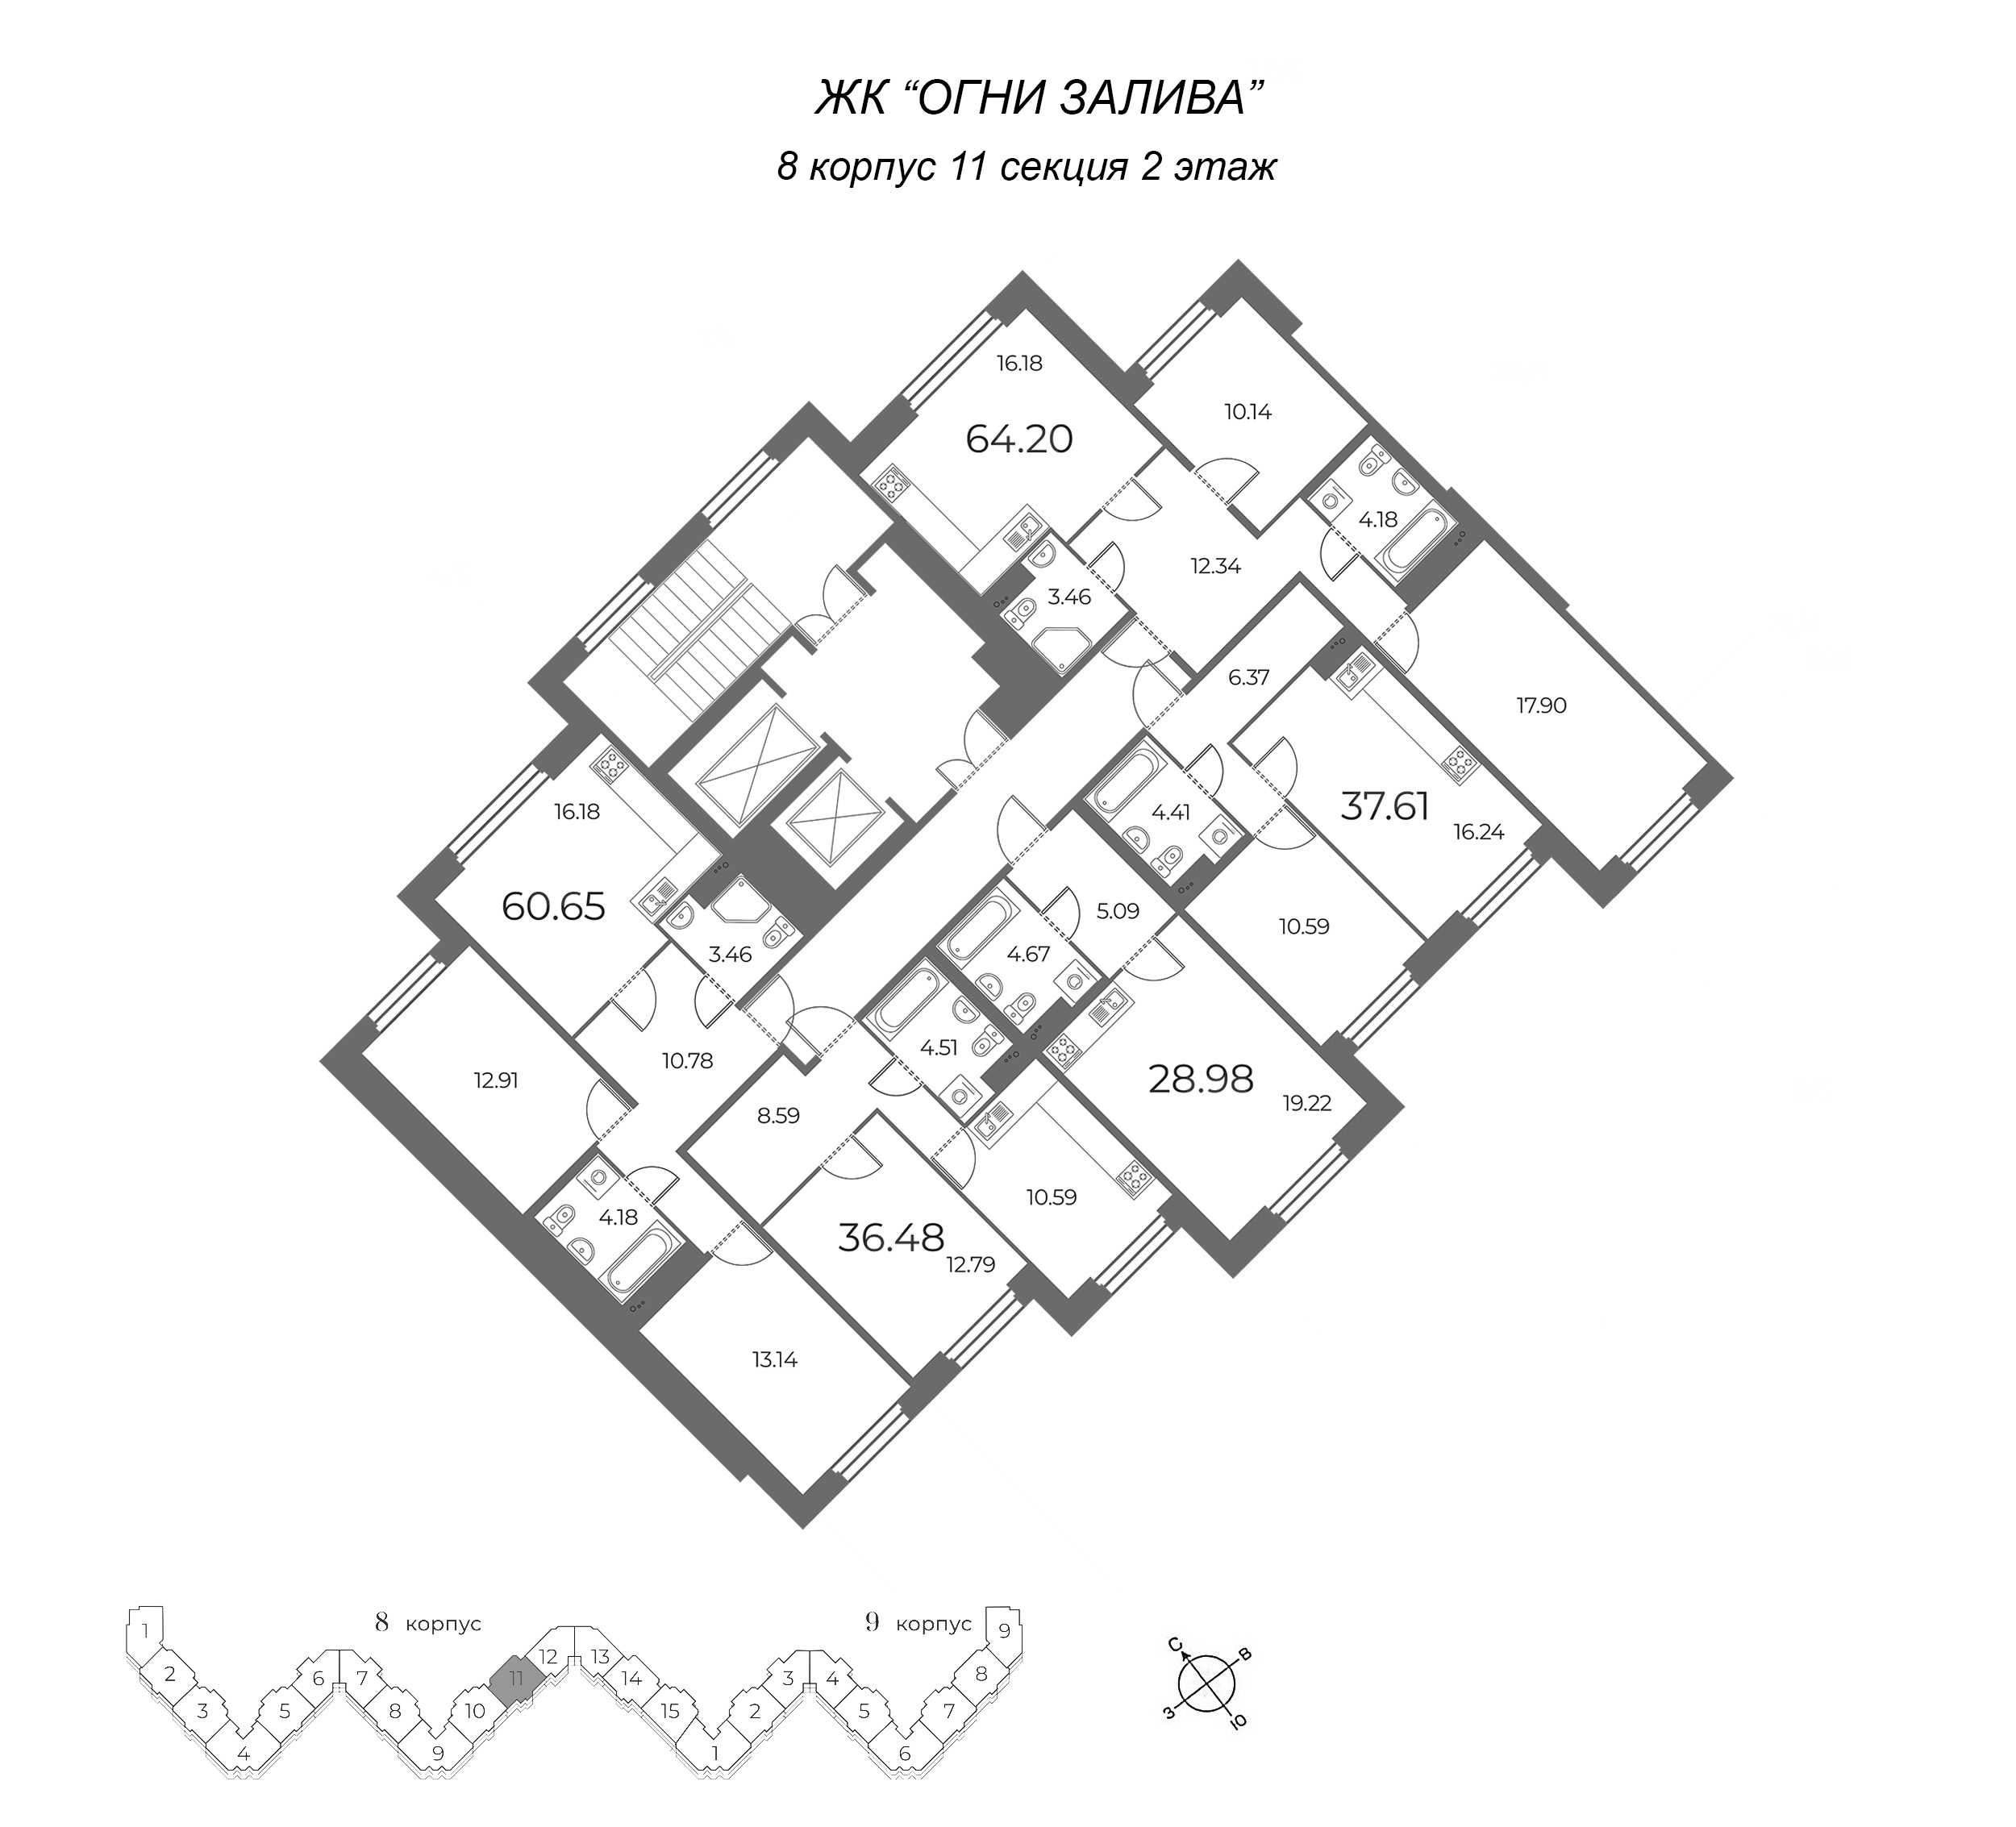 3-комнатная (Евро) квартира, 60.65 м² - планировка этажа